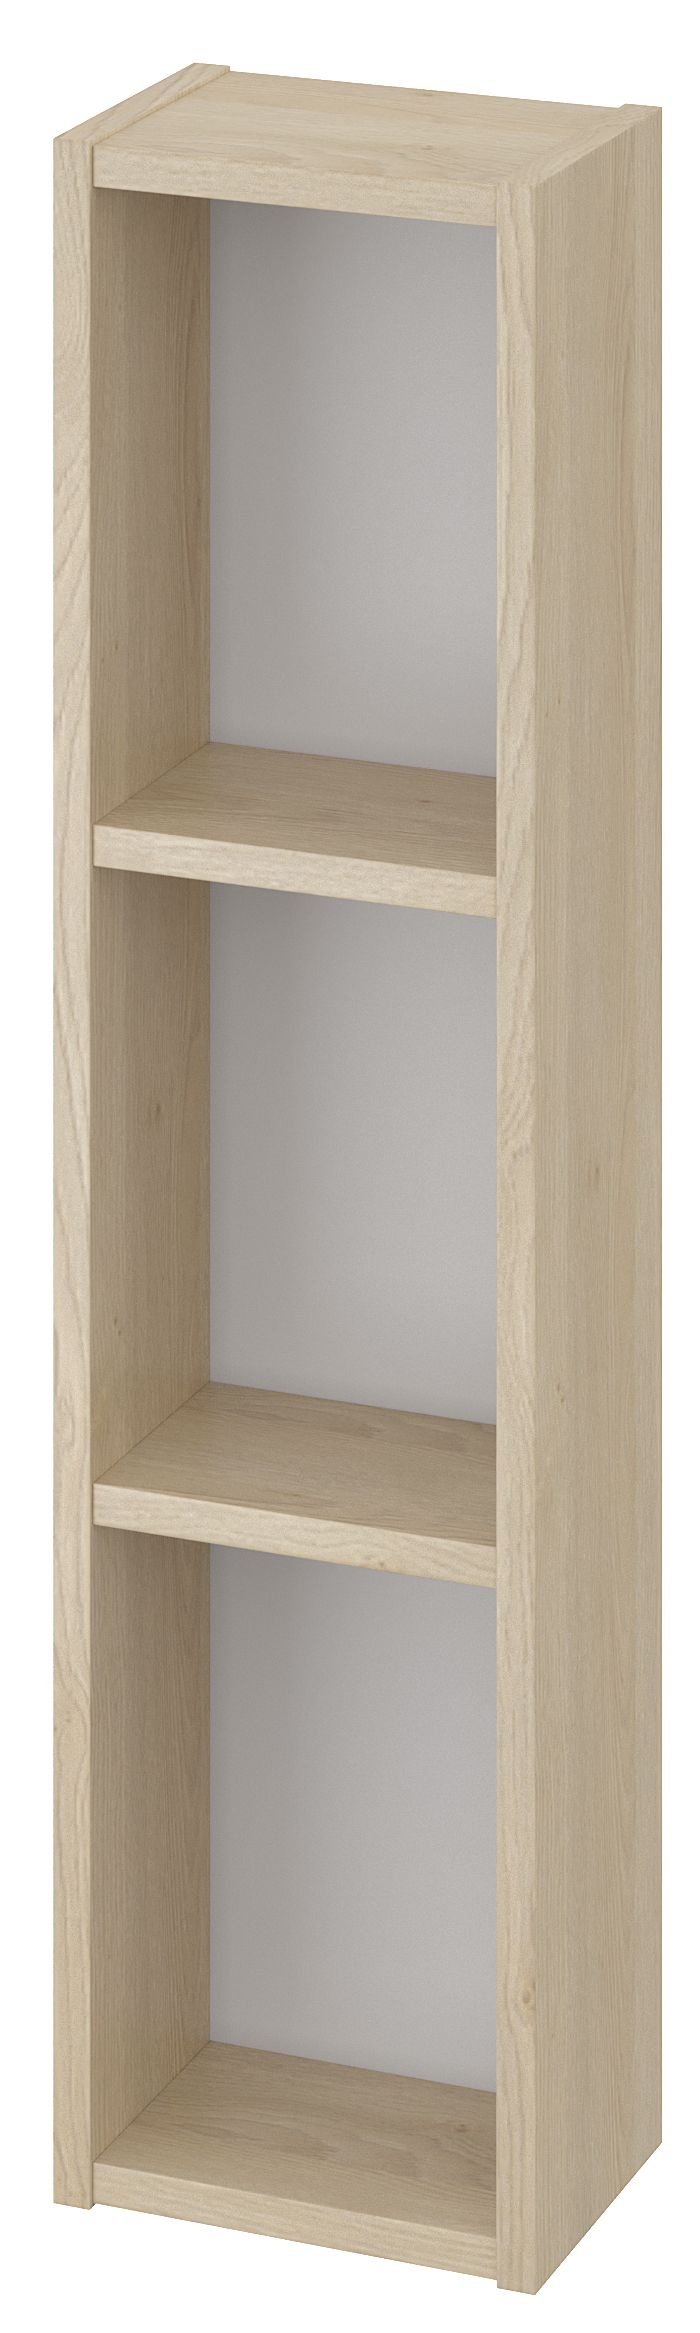 Cersanit Moduo skříňka 20x14.1x80 cm boční závěsné dub K116-023